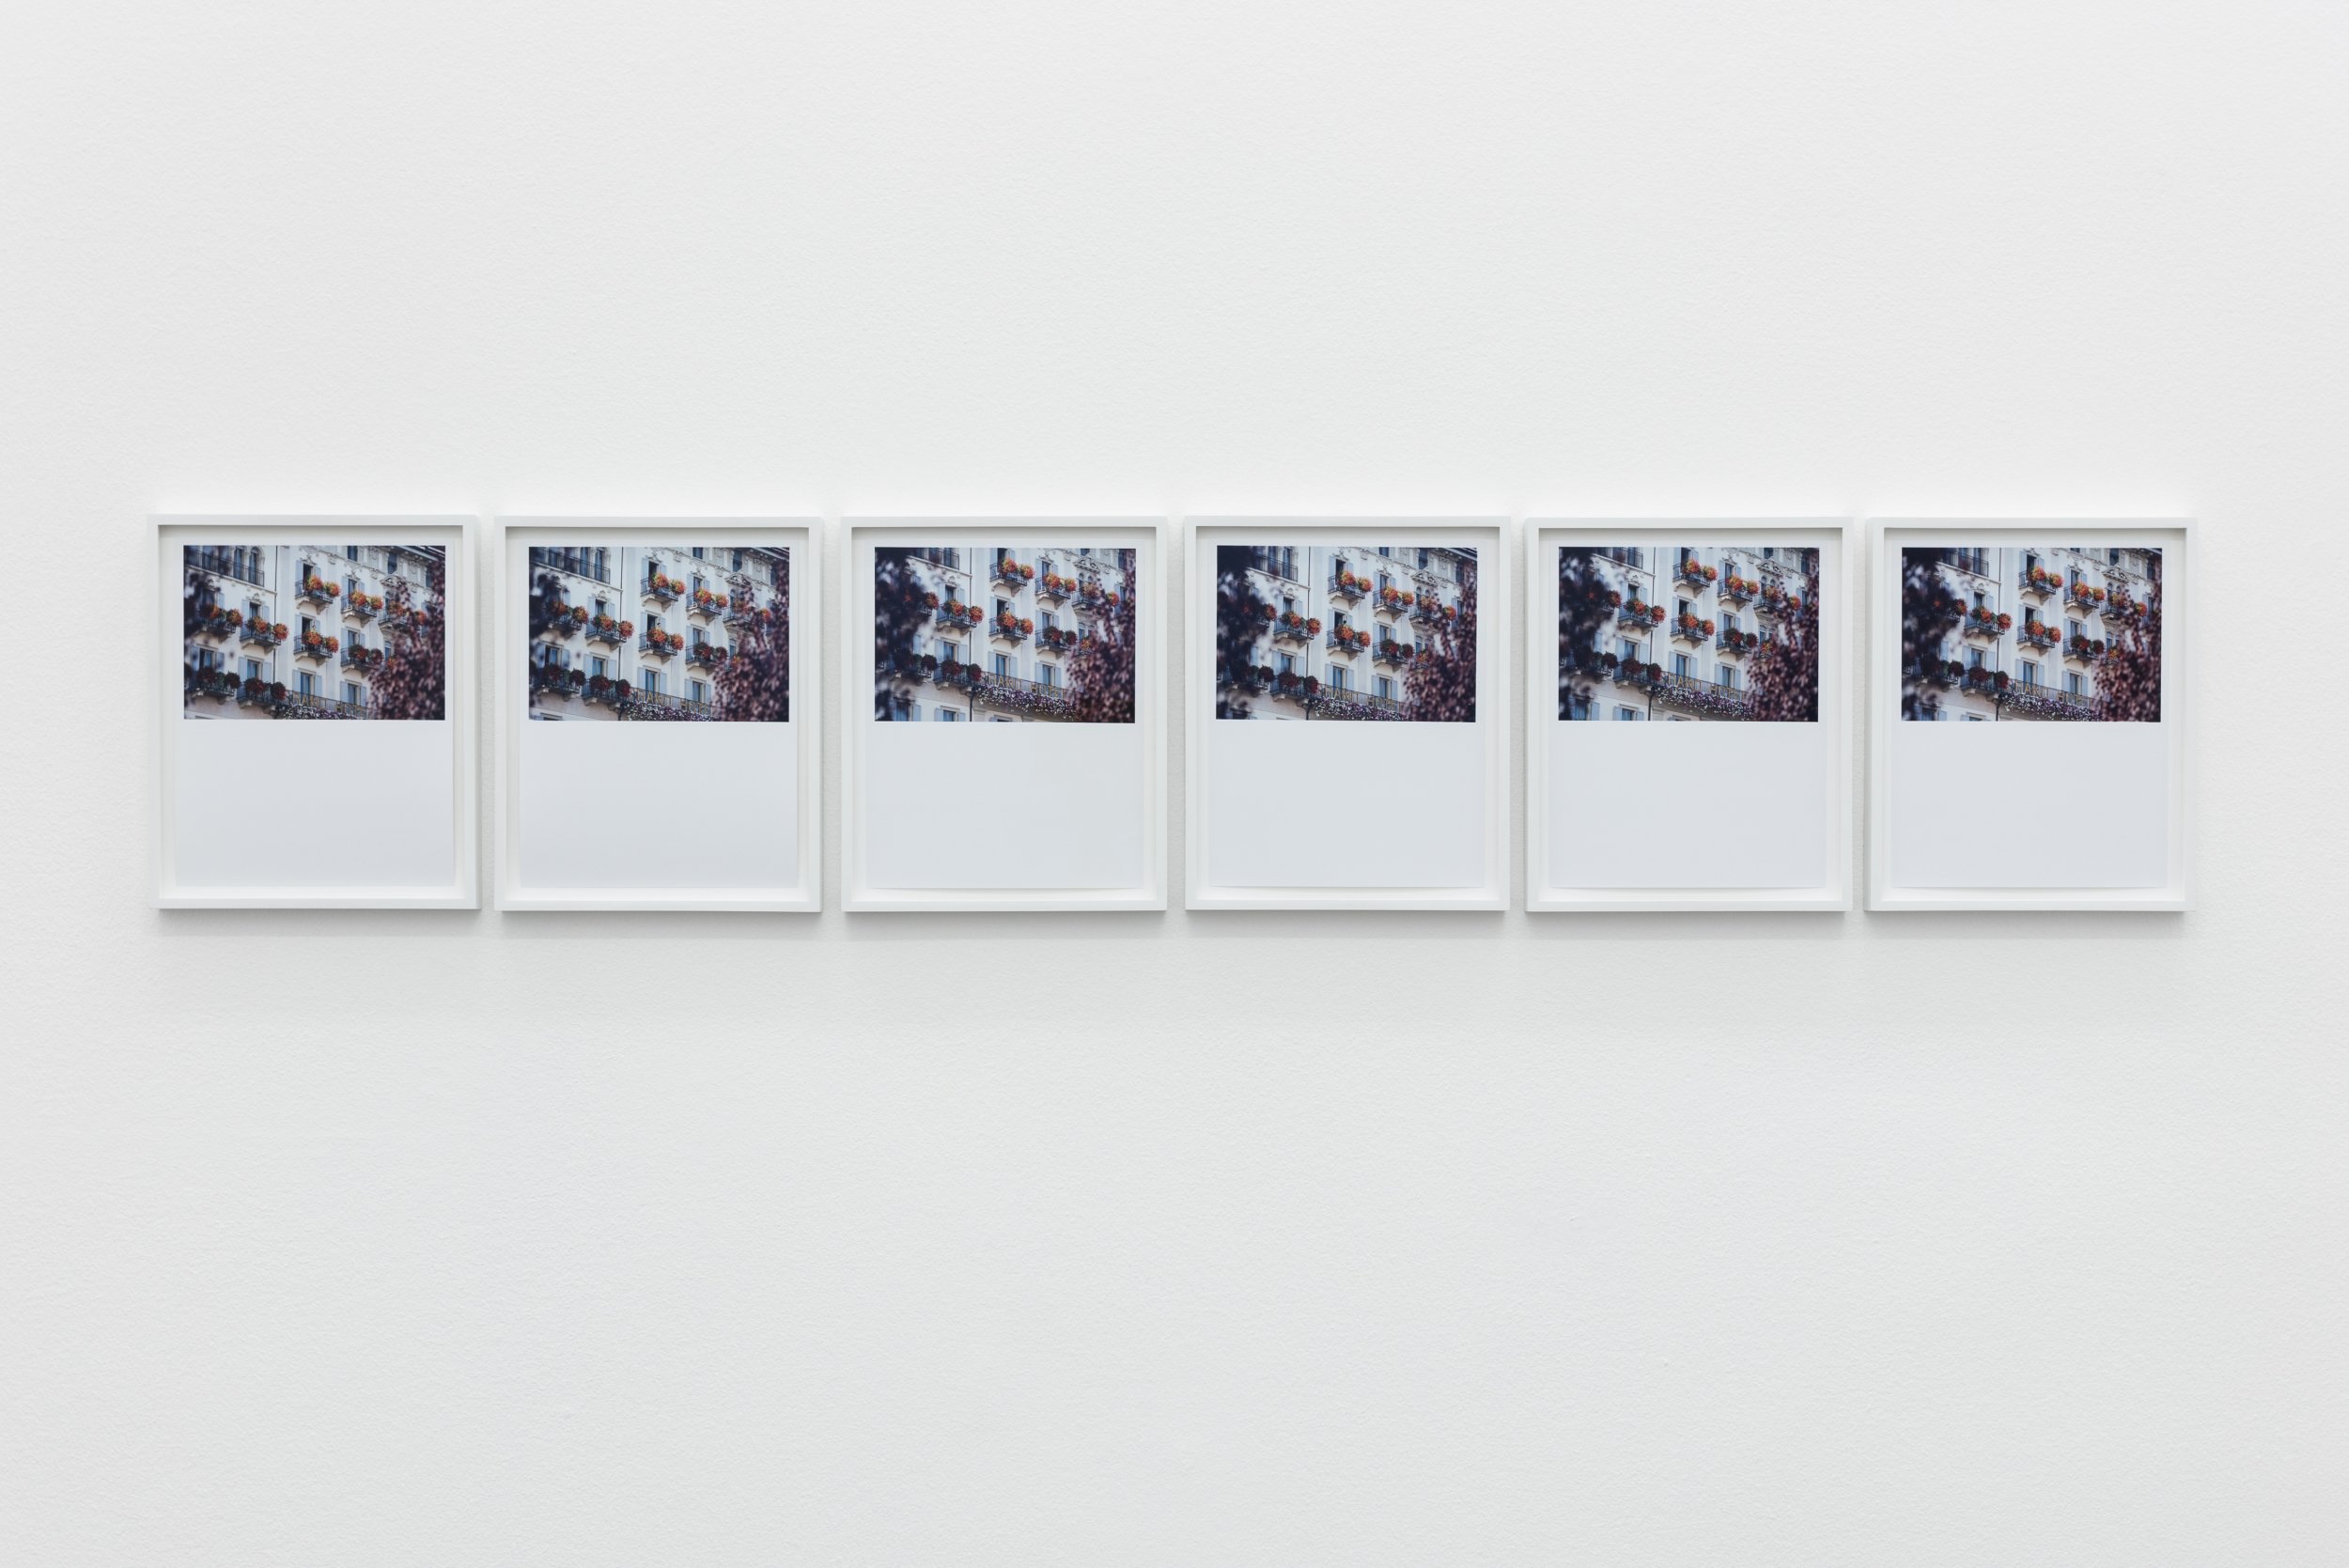 Daniel Gustav Cramer, Tales 44 (Stresa, Lago Maggiore, Italy, September 2012), 2013. C-print, framed. 6 x (25.5 x 20.5 cm). Ed. 5
 
